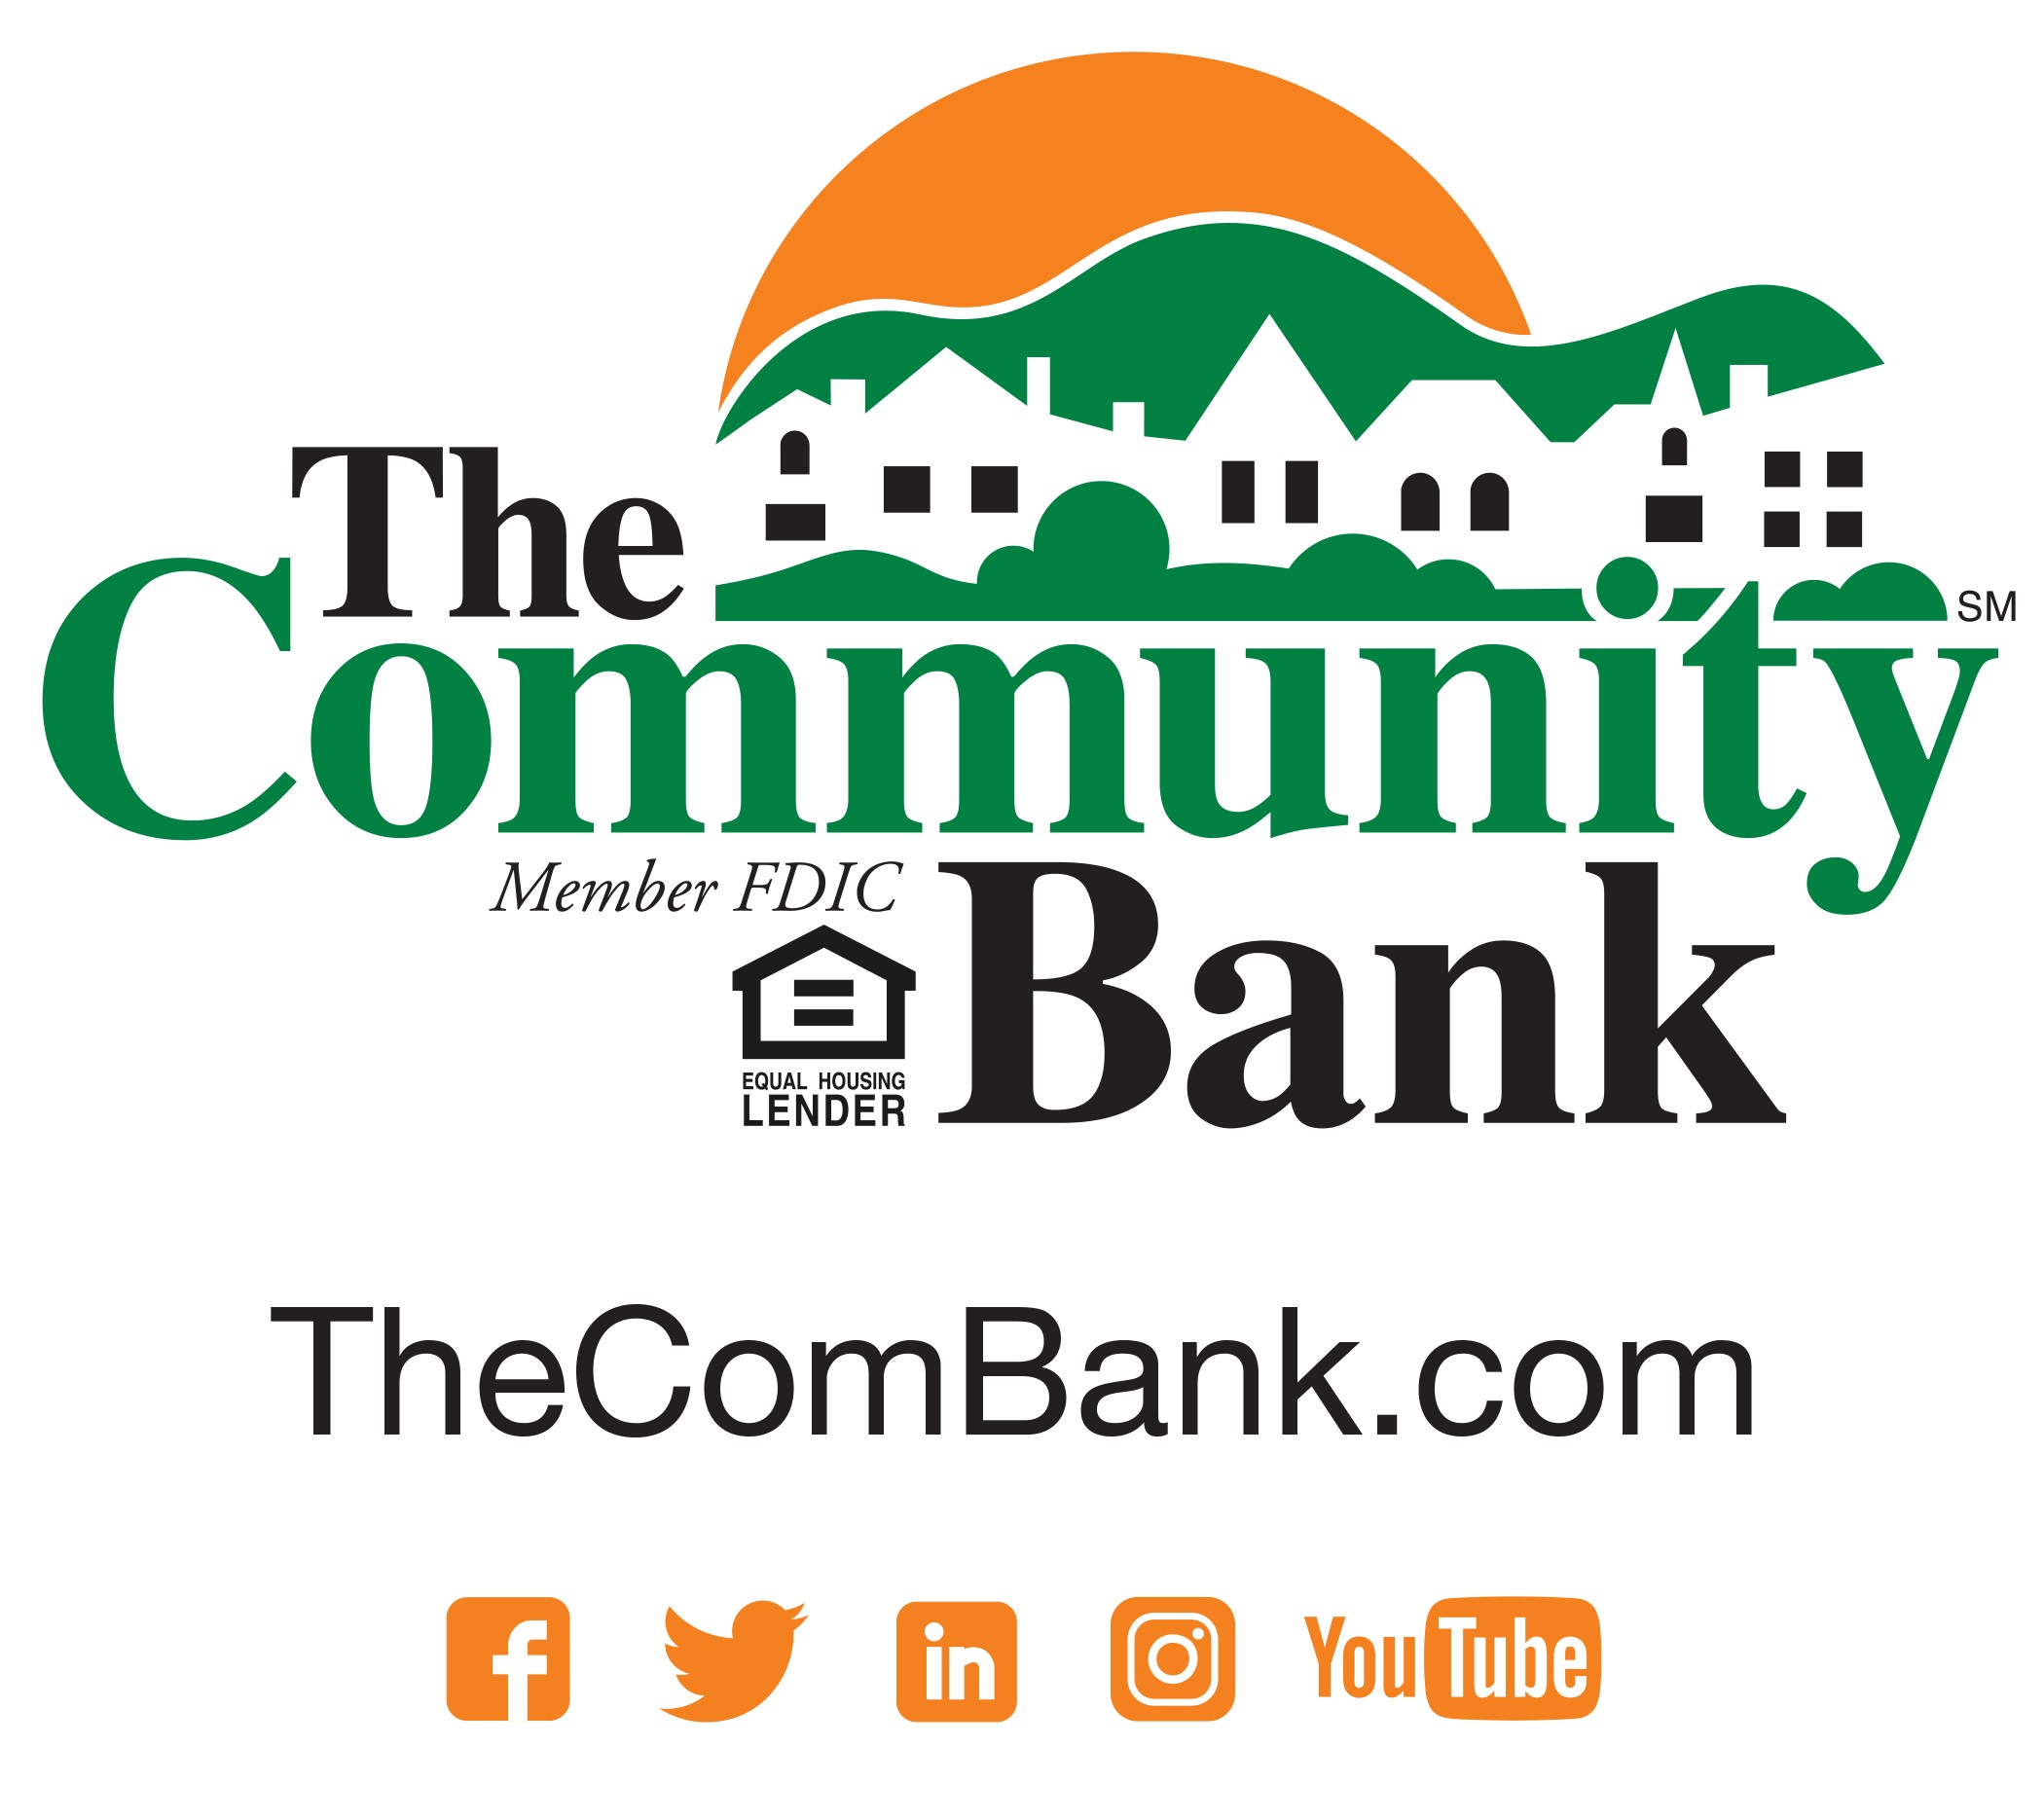 The Community Bank